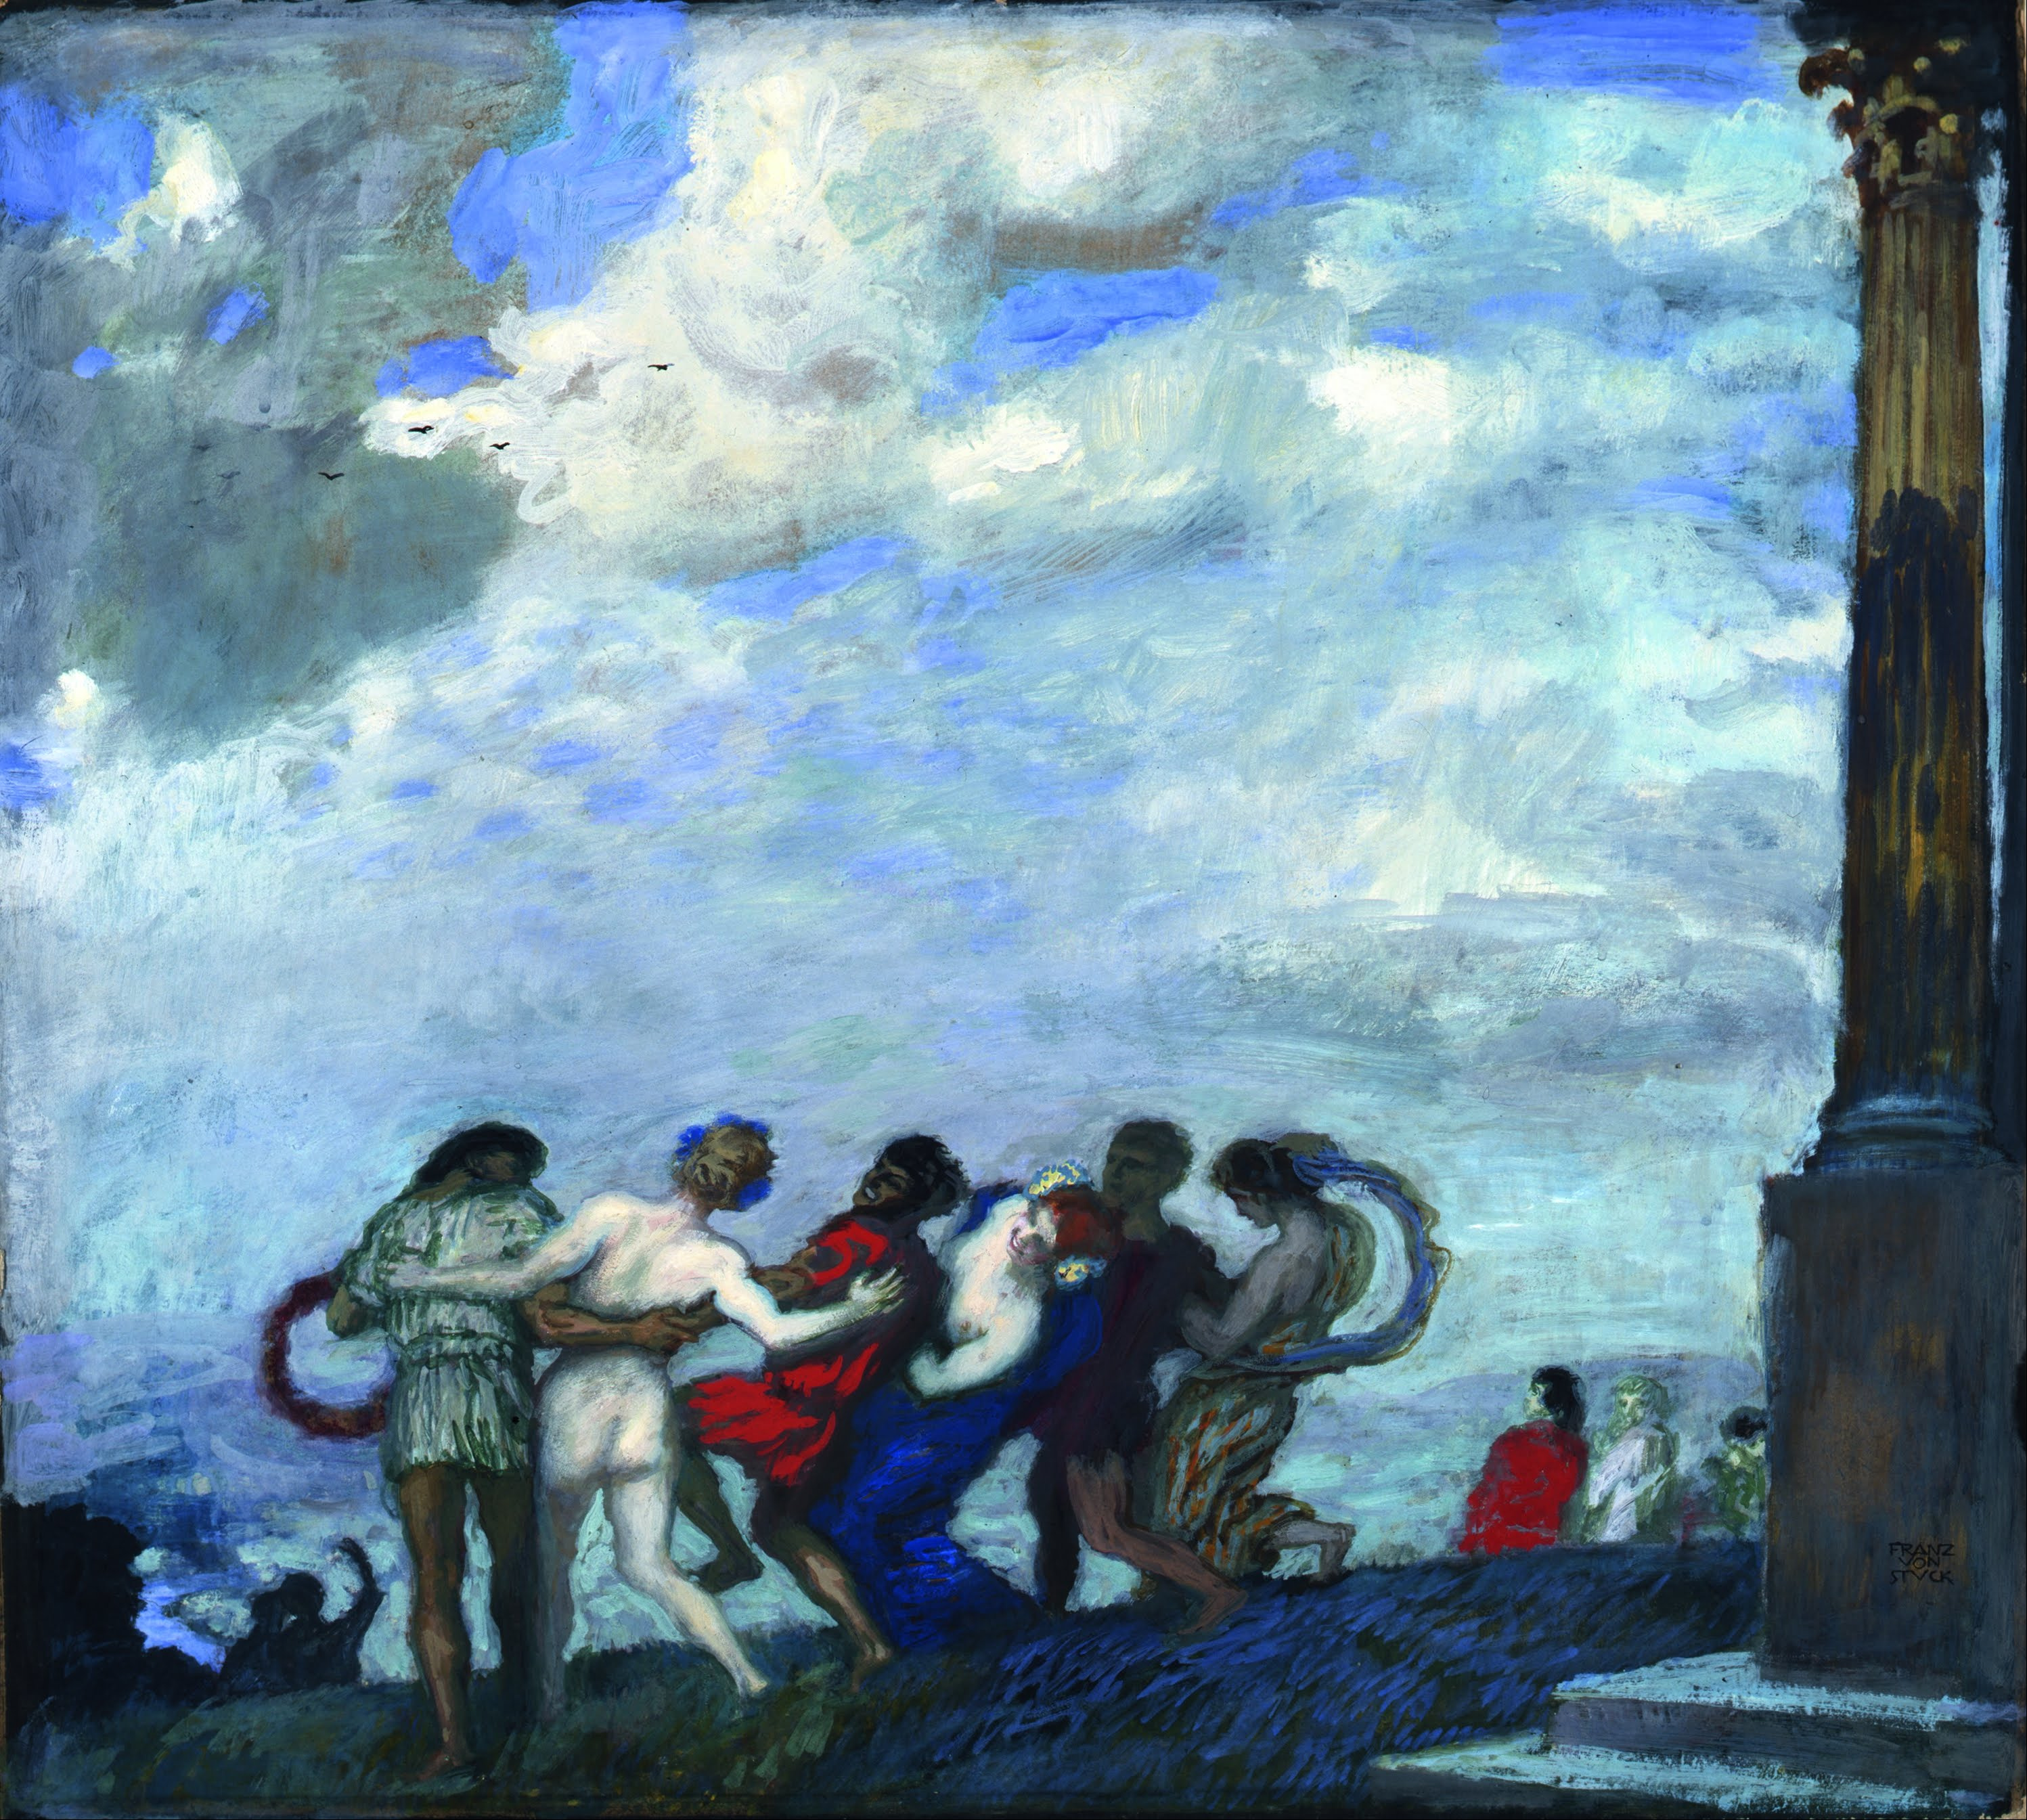 De Dans by Franz von Stuck - 1910 - 79,5 x 71 cm Museum Kunstpalast